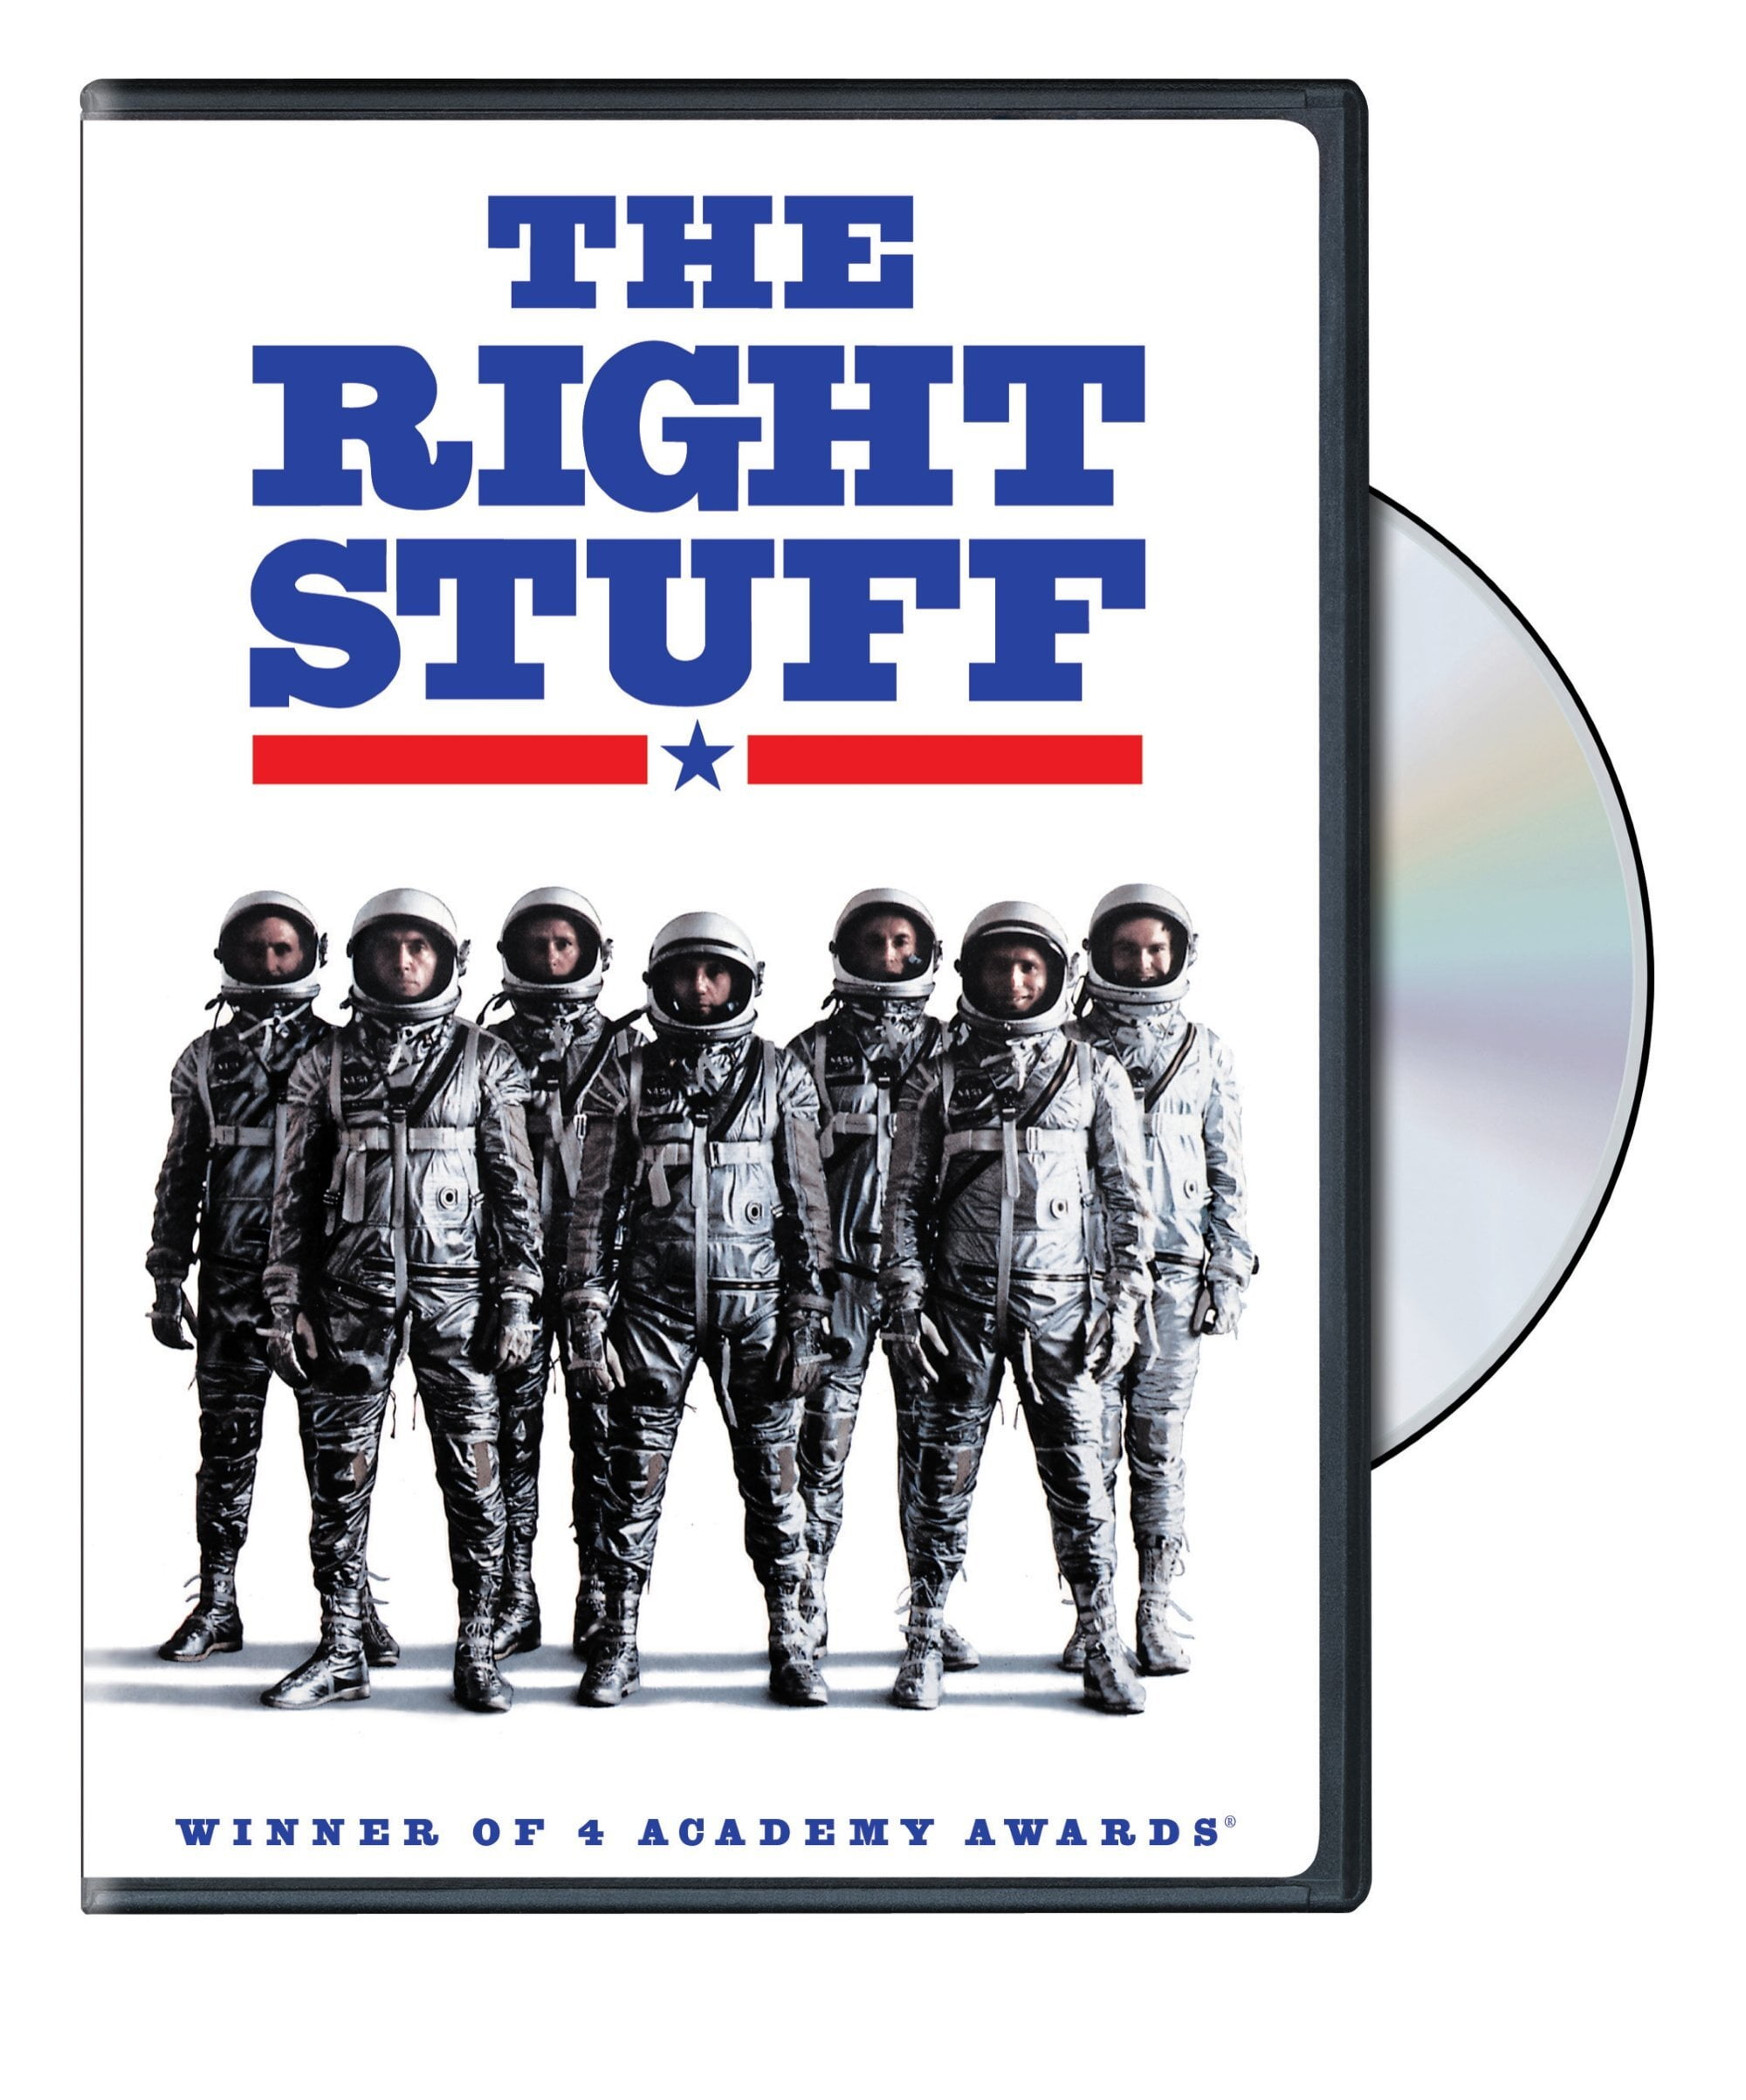 The Right Stuff (Film) - TV Tropes